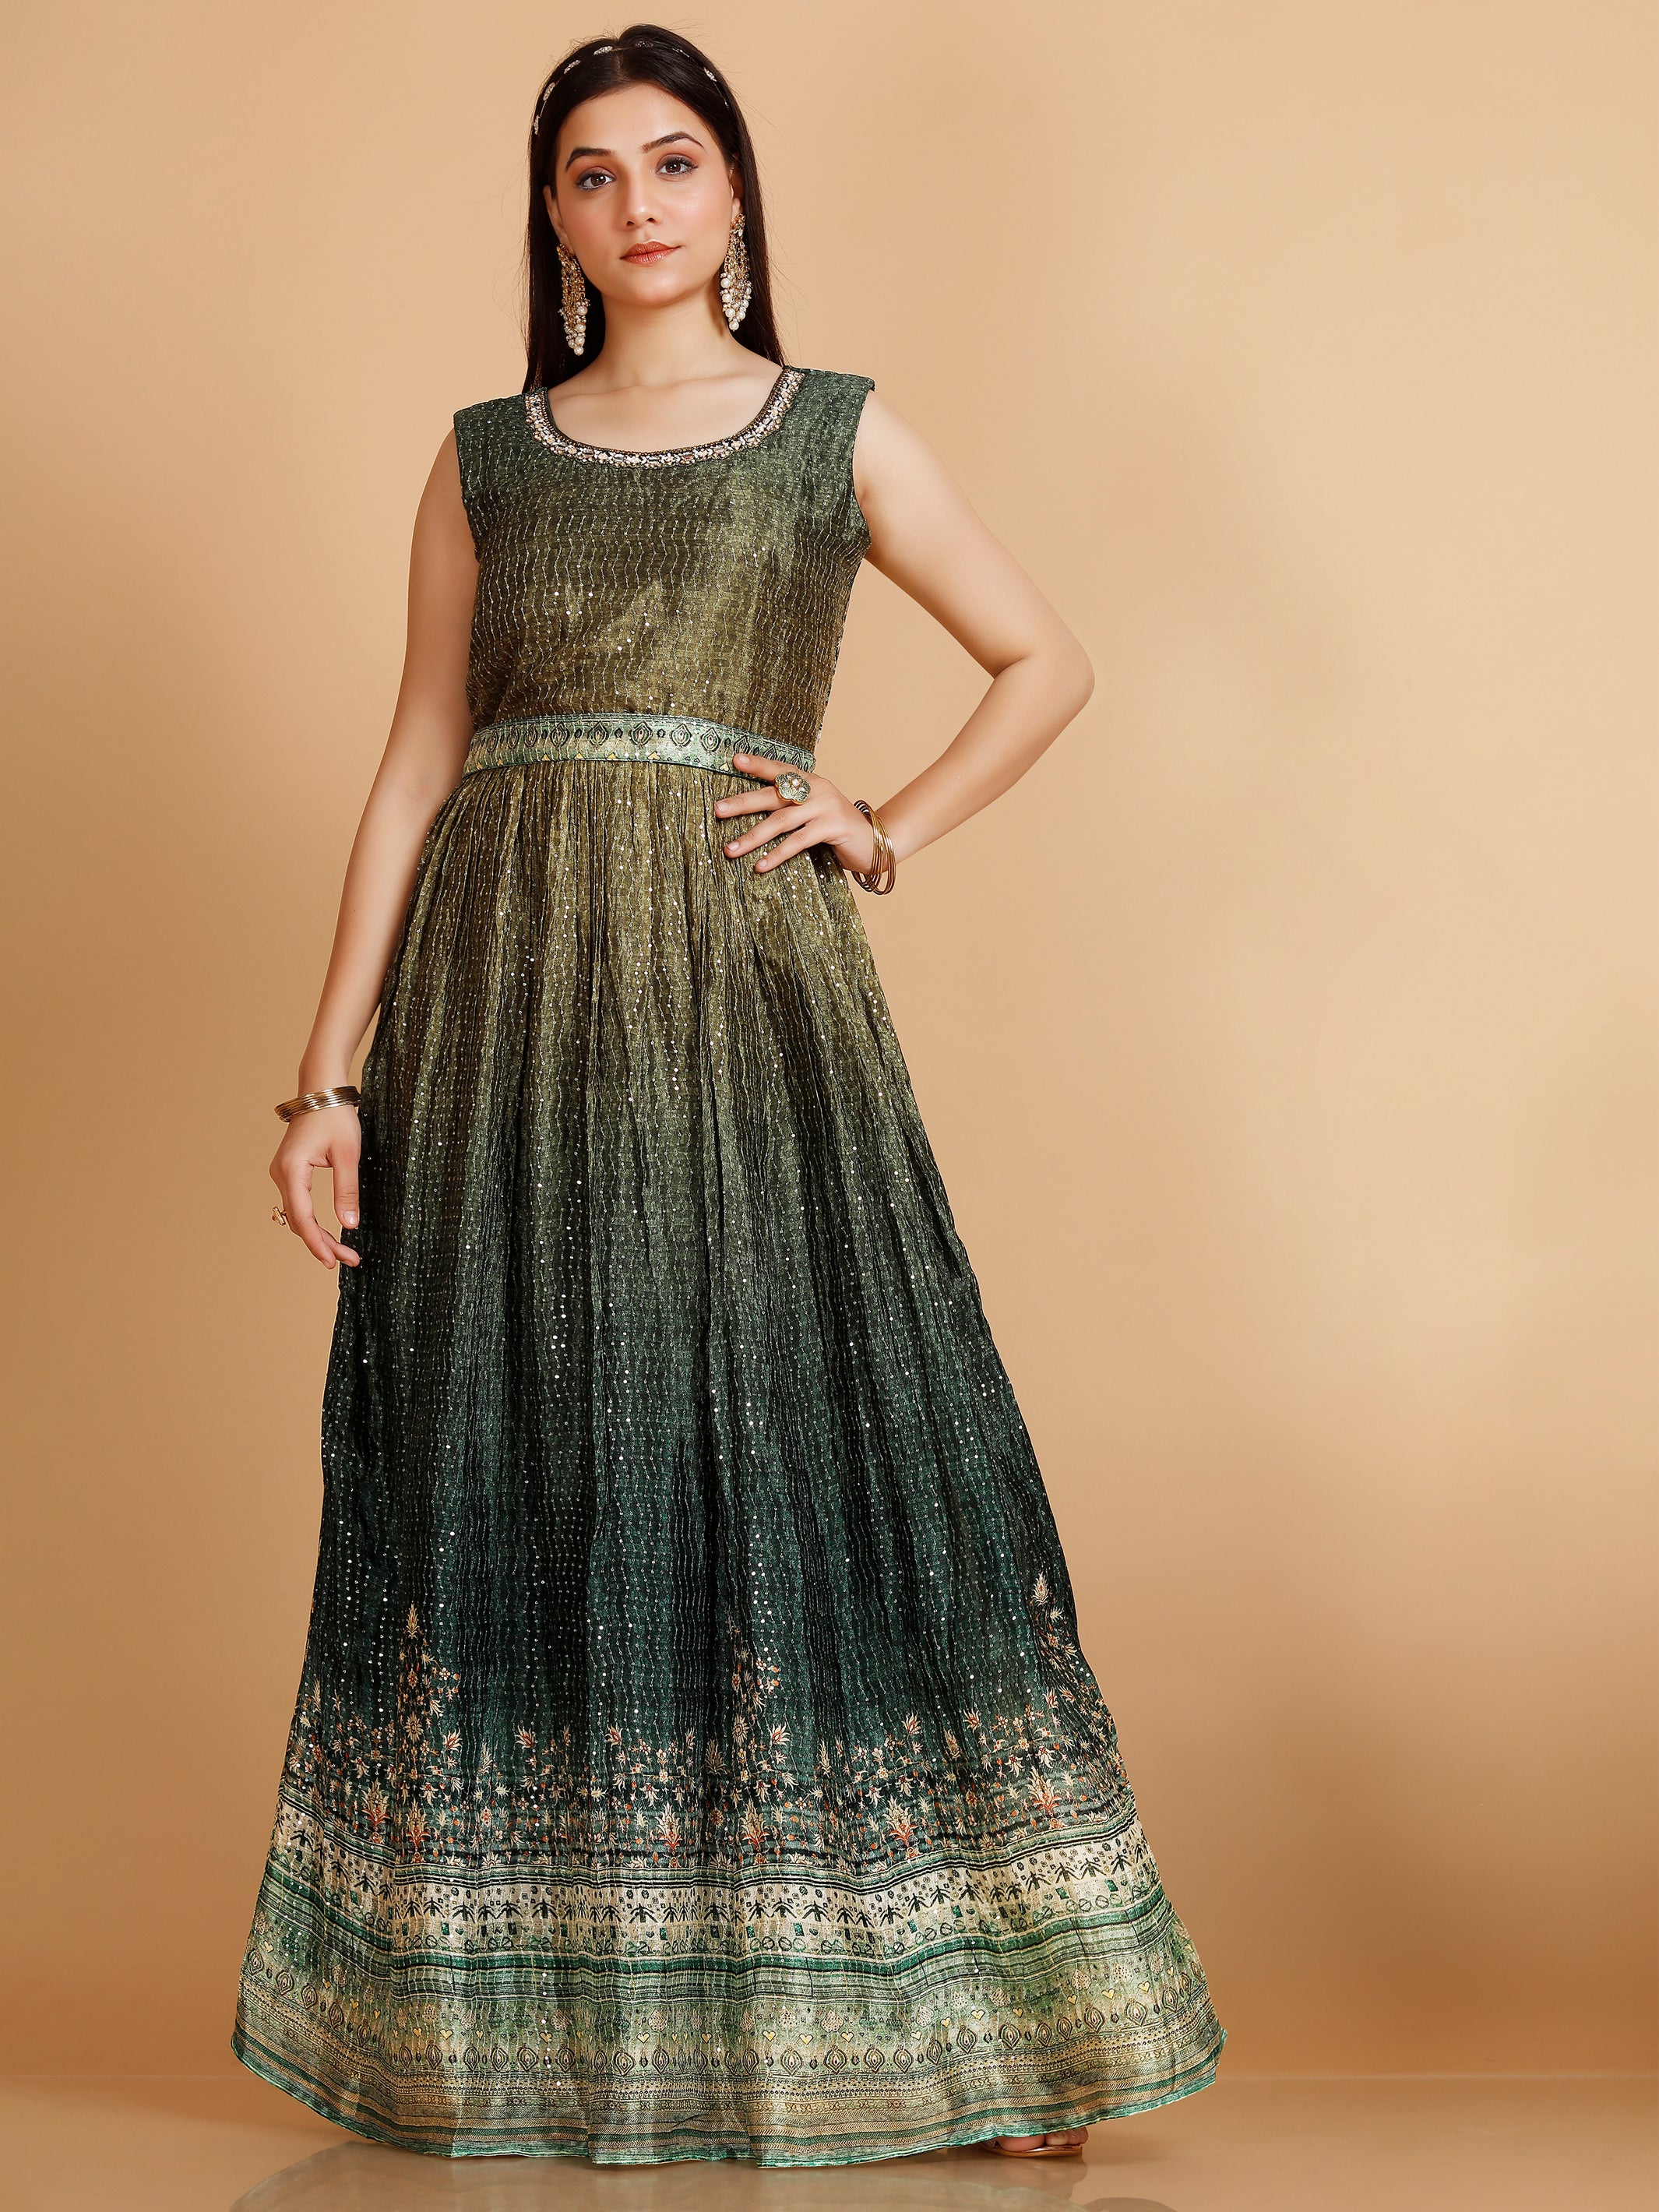 colour(Y) | Pakistani bridal dresses, Indian wedding dress, Pakistani bridal